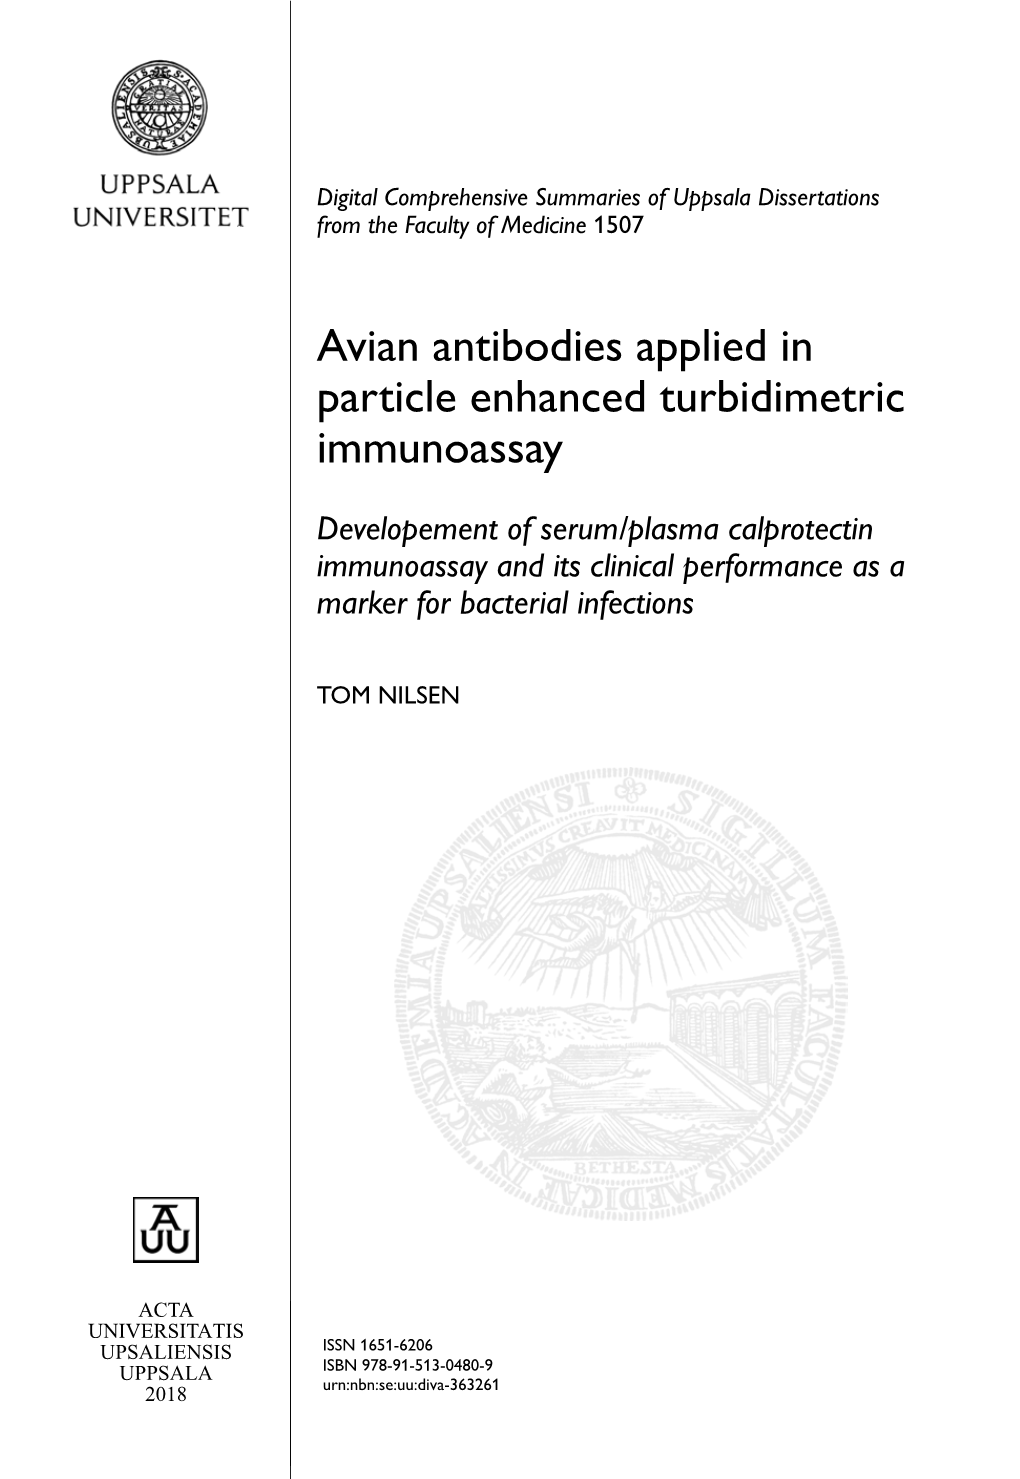 Avian Antibodies Applied in Particle Enhanced Turbidimetric Immunoassay